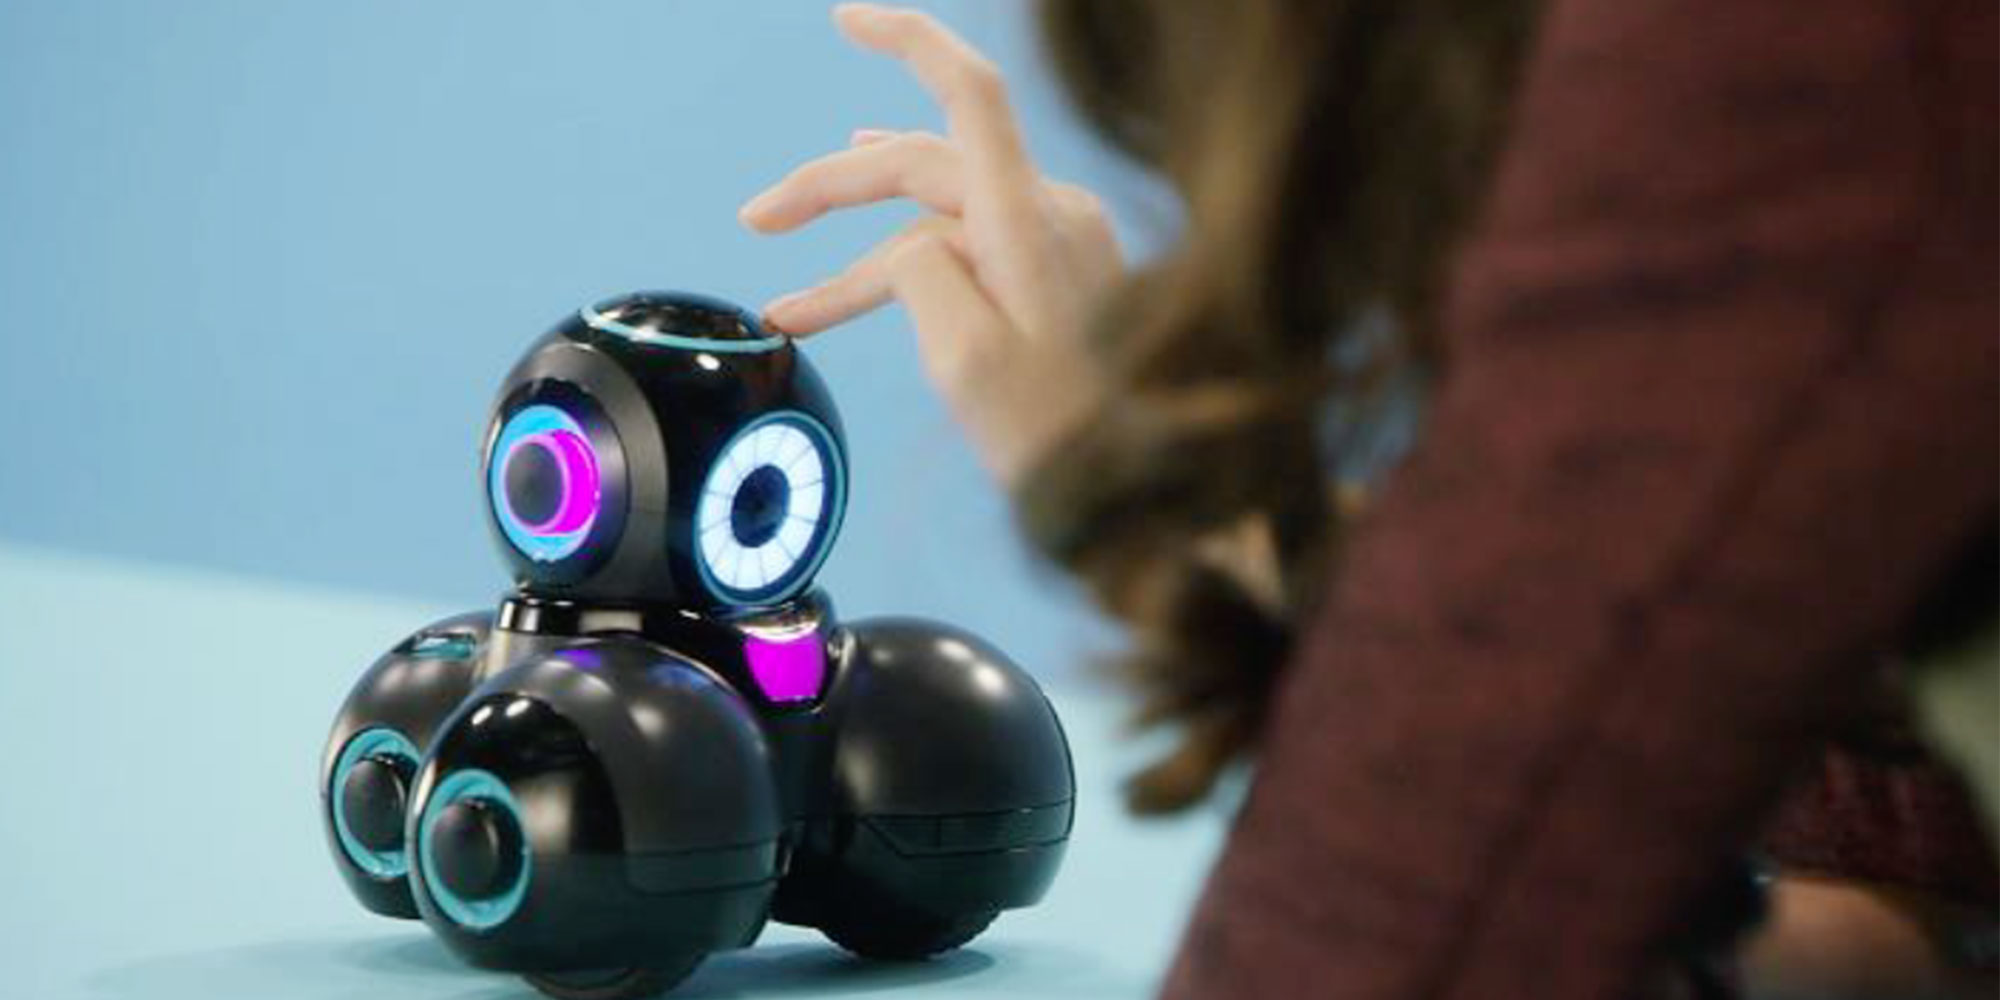 Wonder Workshop's Cue Robot teaches kids about tech for $145.50